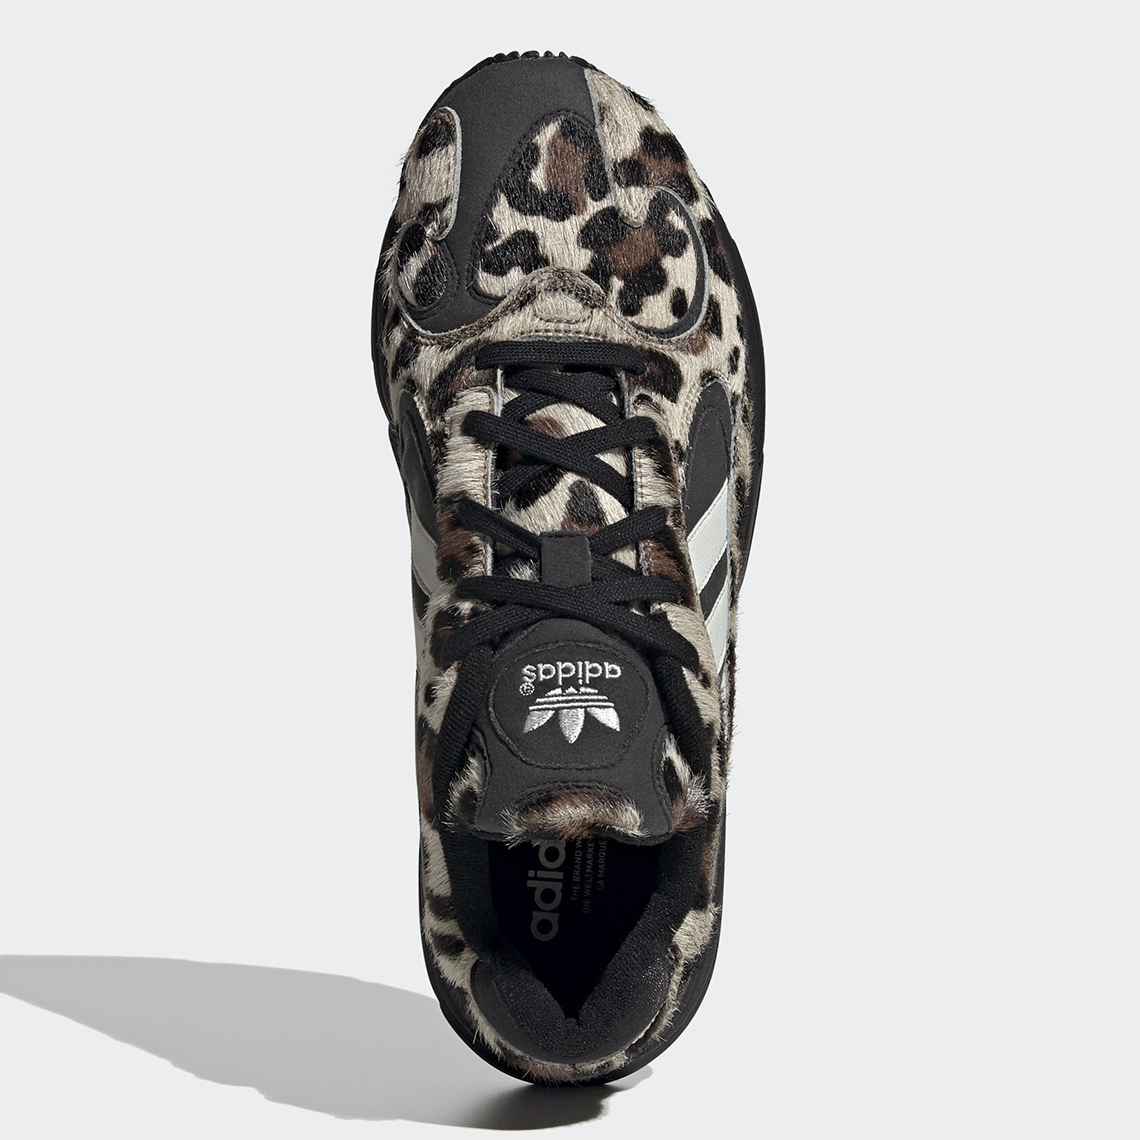 adidas originals yung 1 trainers in leopard